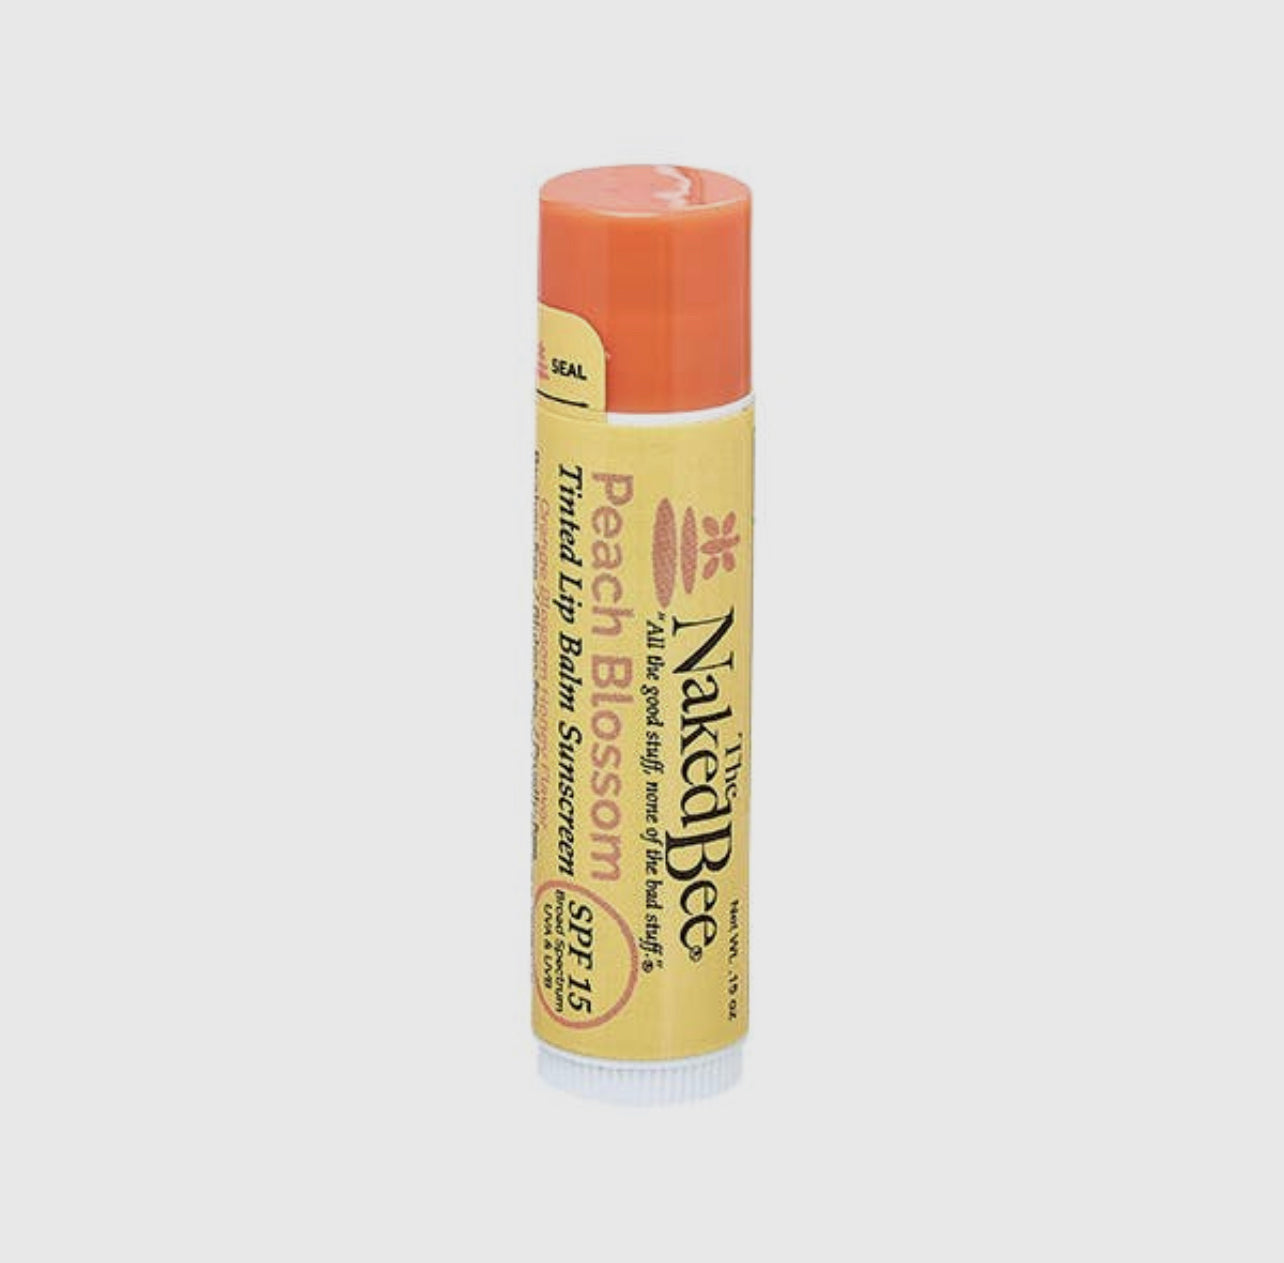 SPF 15 Tinted Lip Balm - Orange Blossom in Peach Blossom Tint